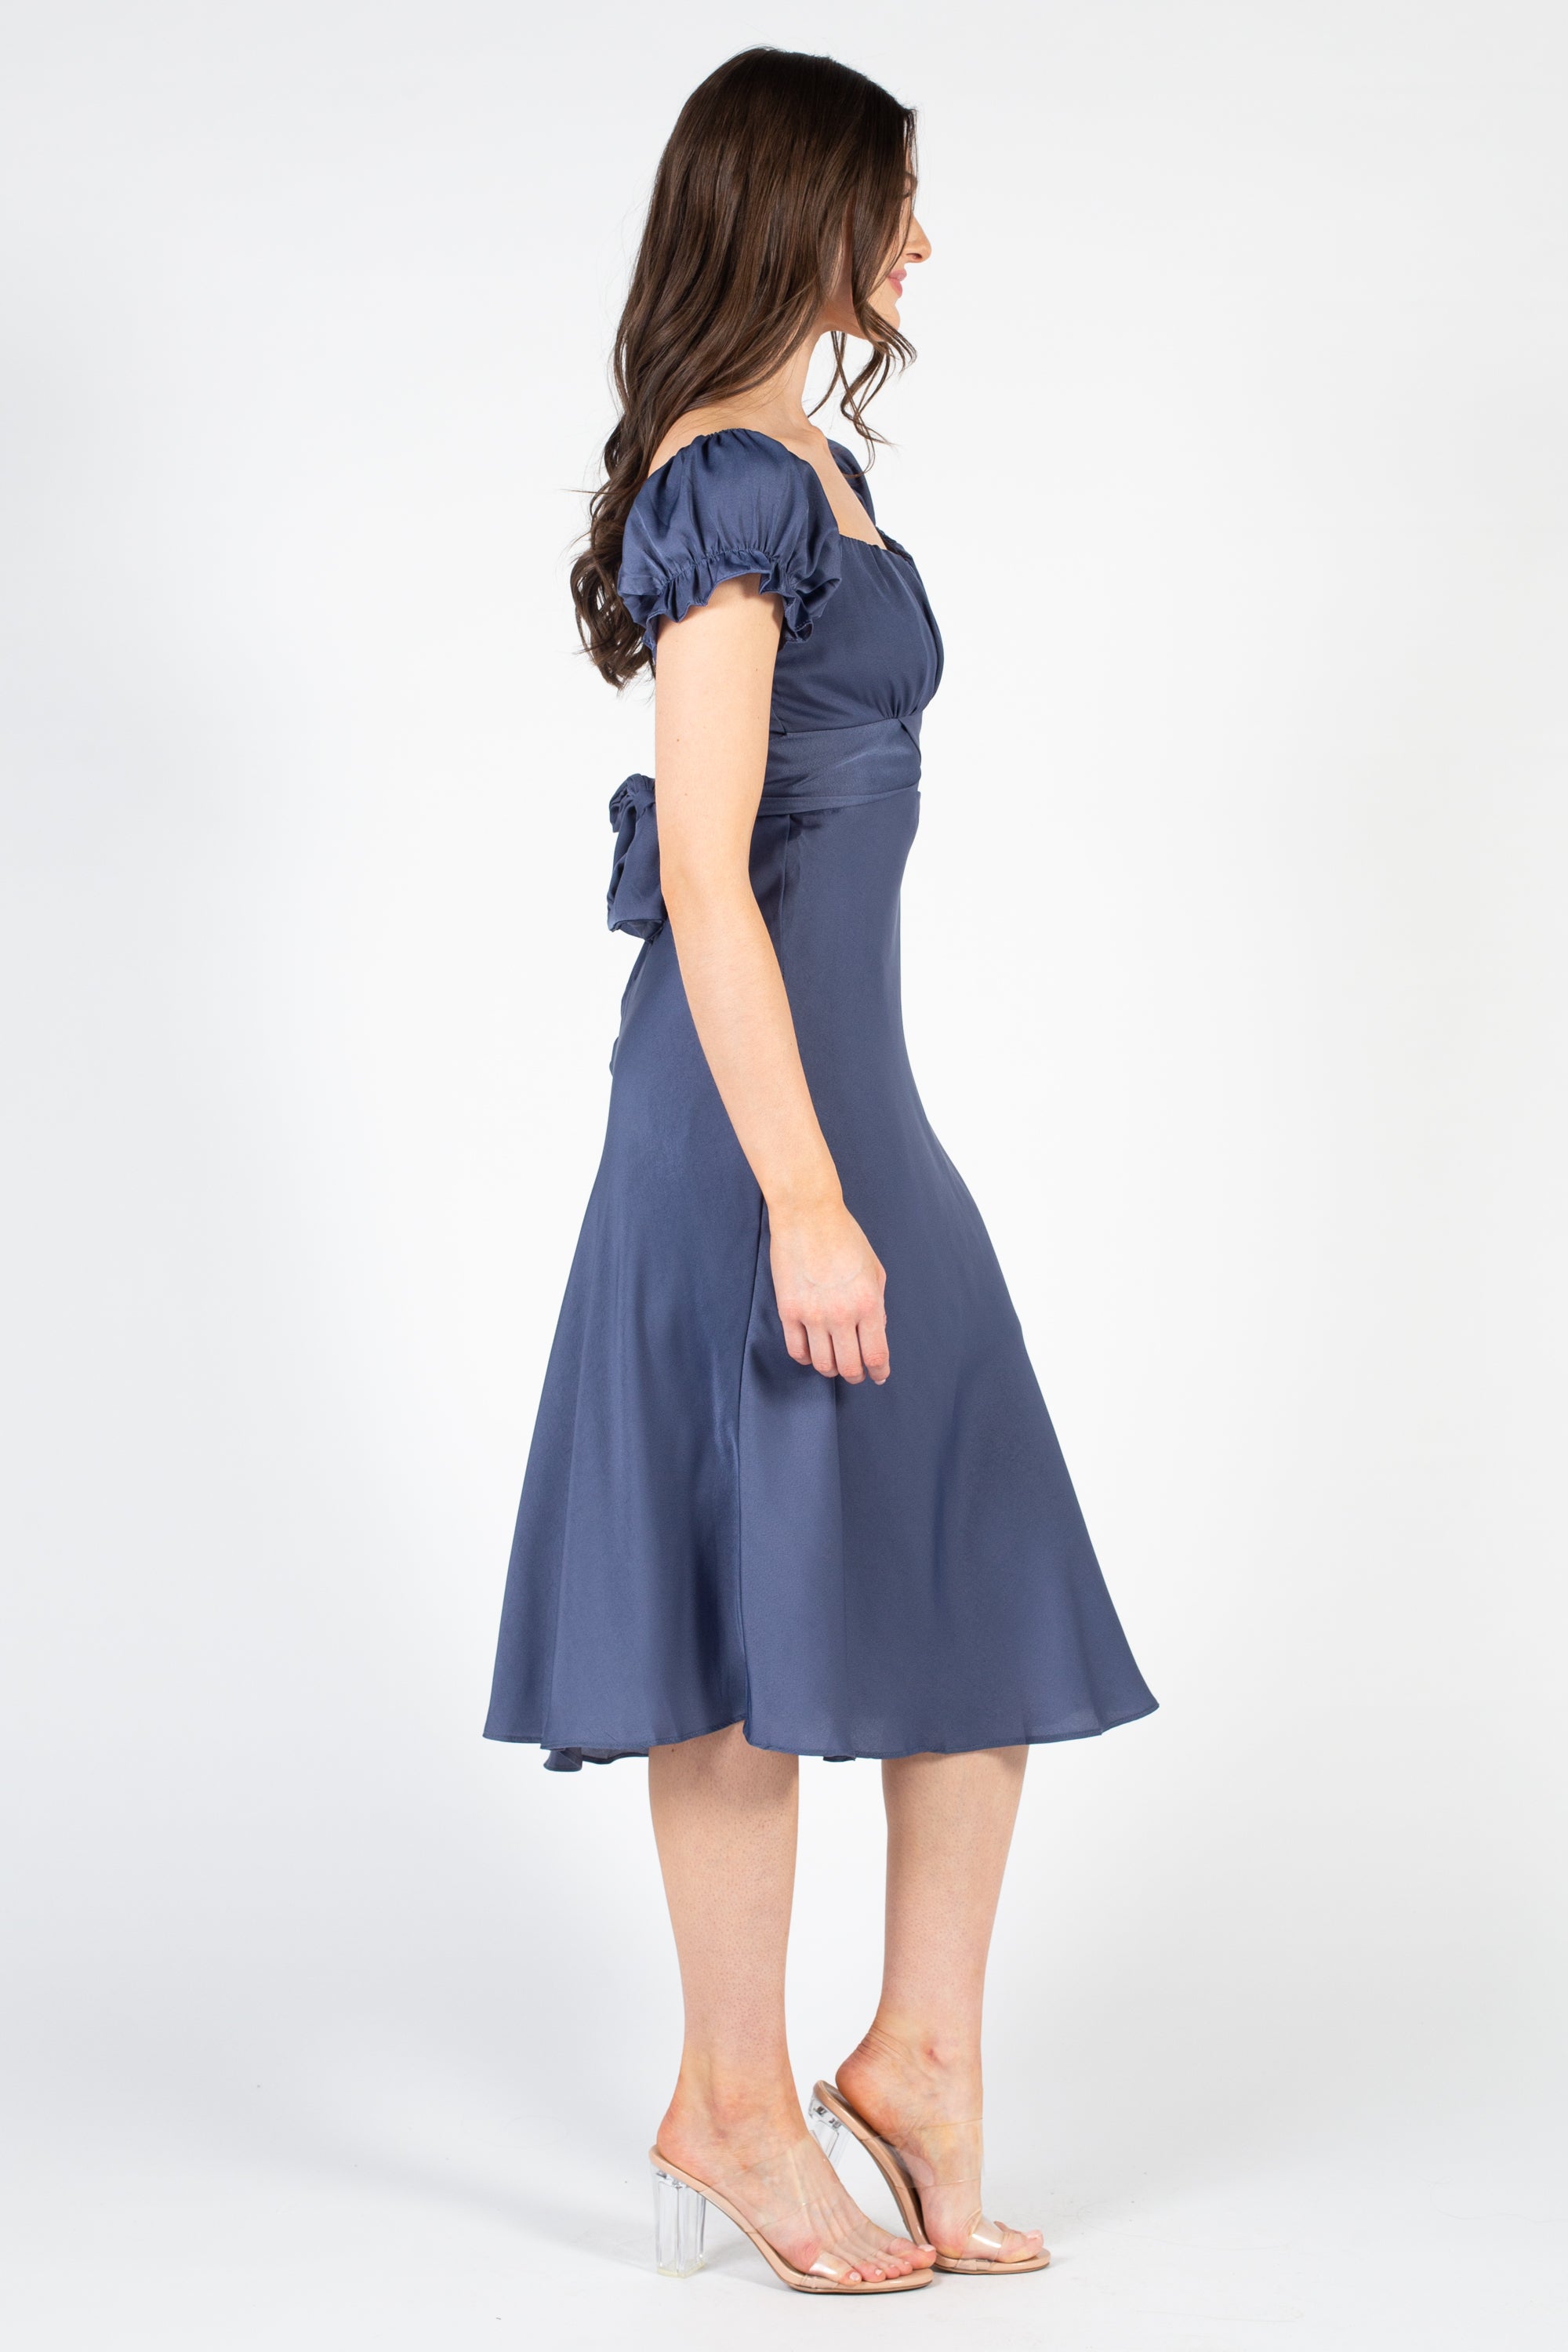 Emmaline Floral Maxi Dress